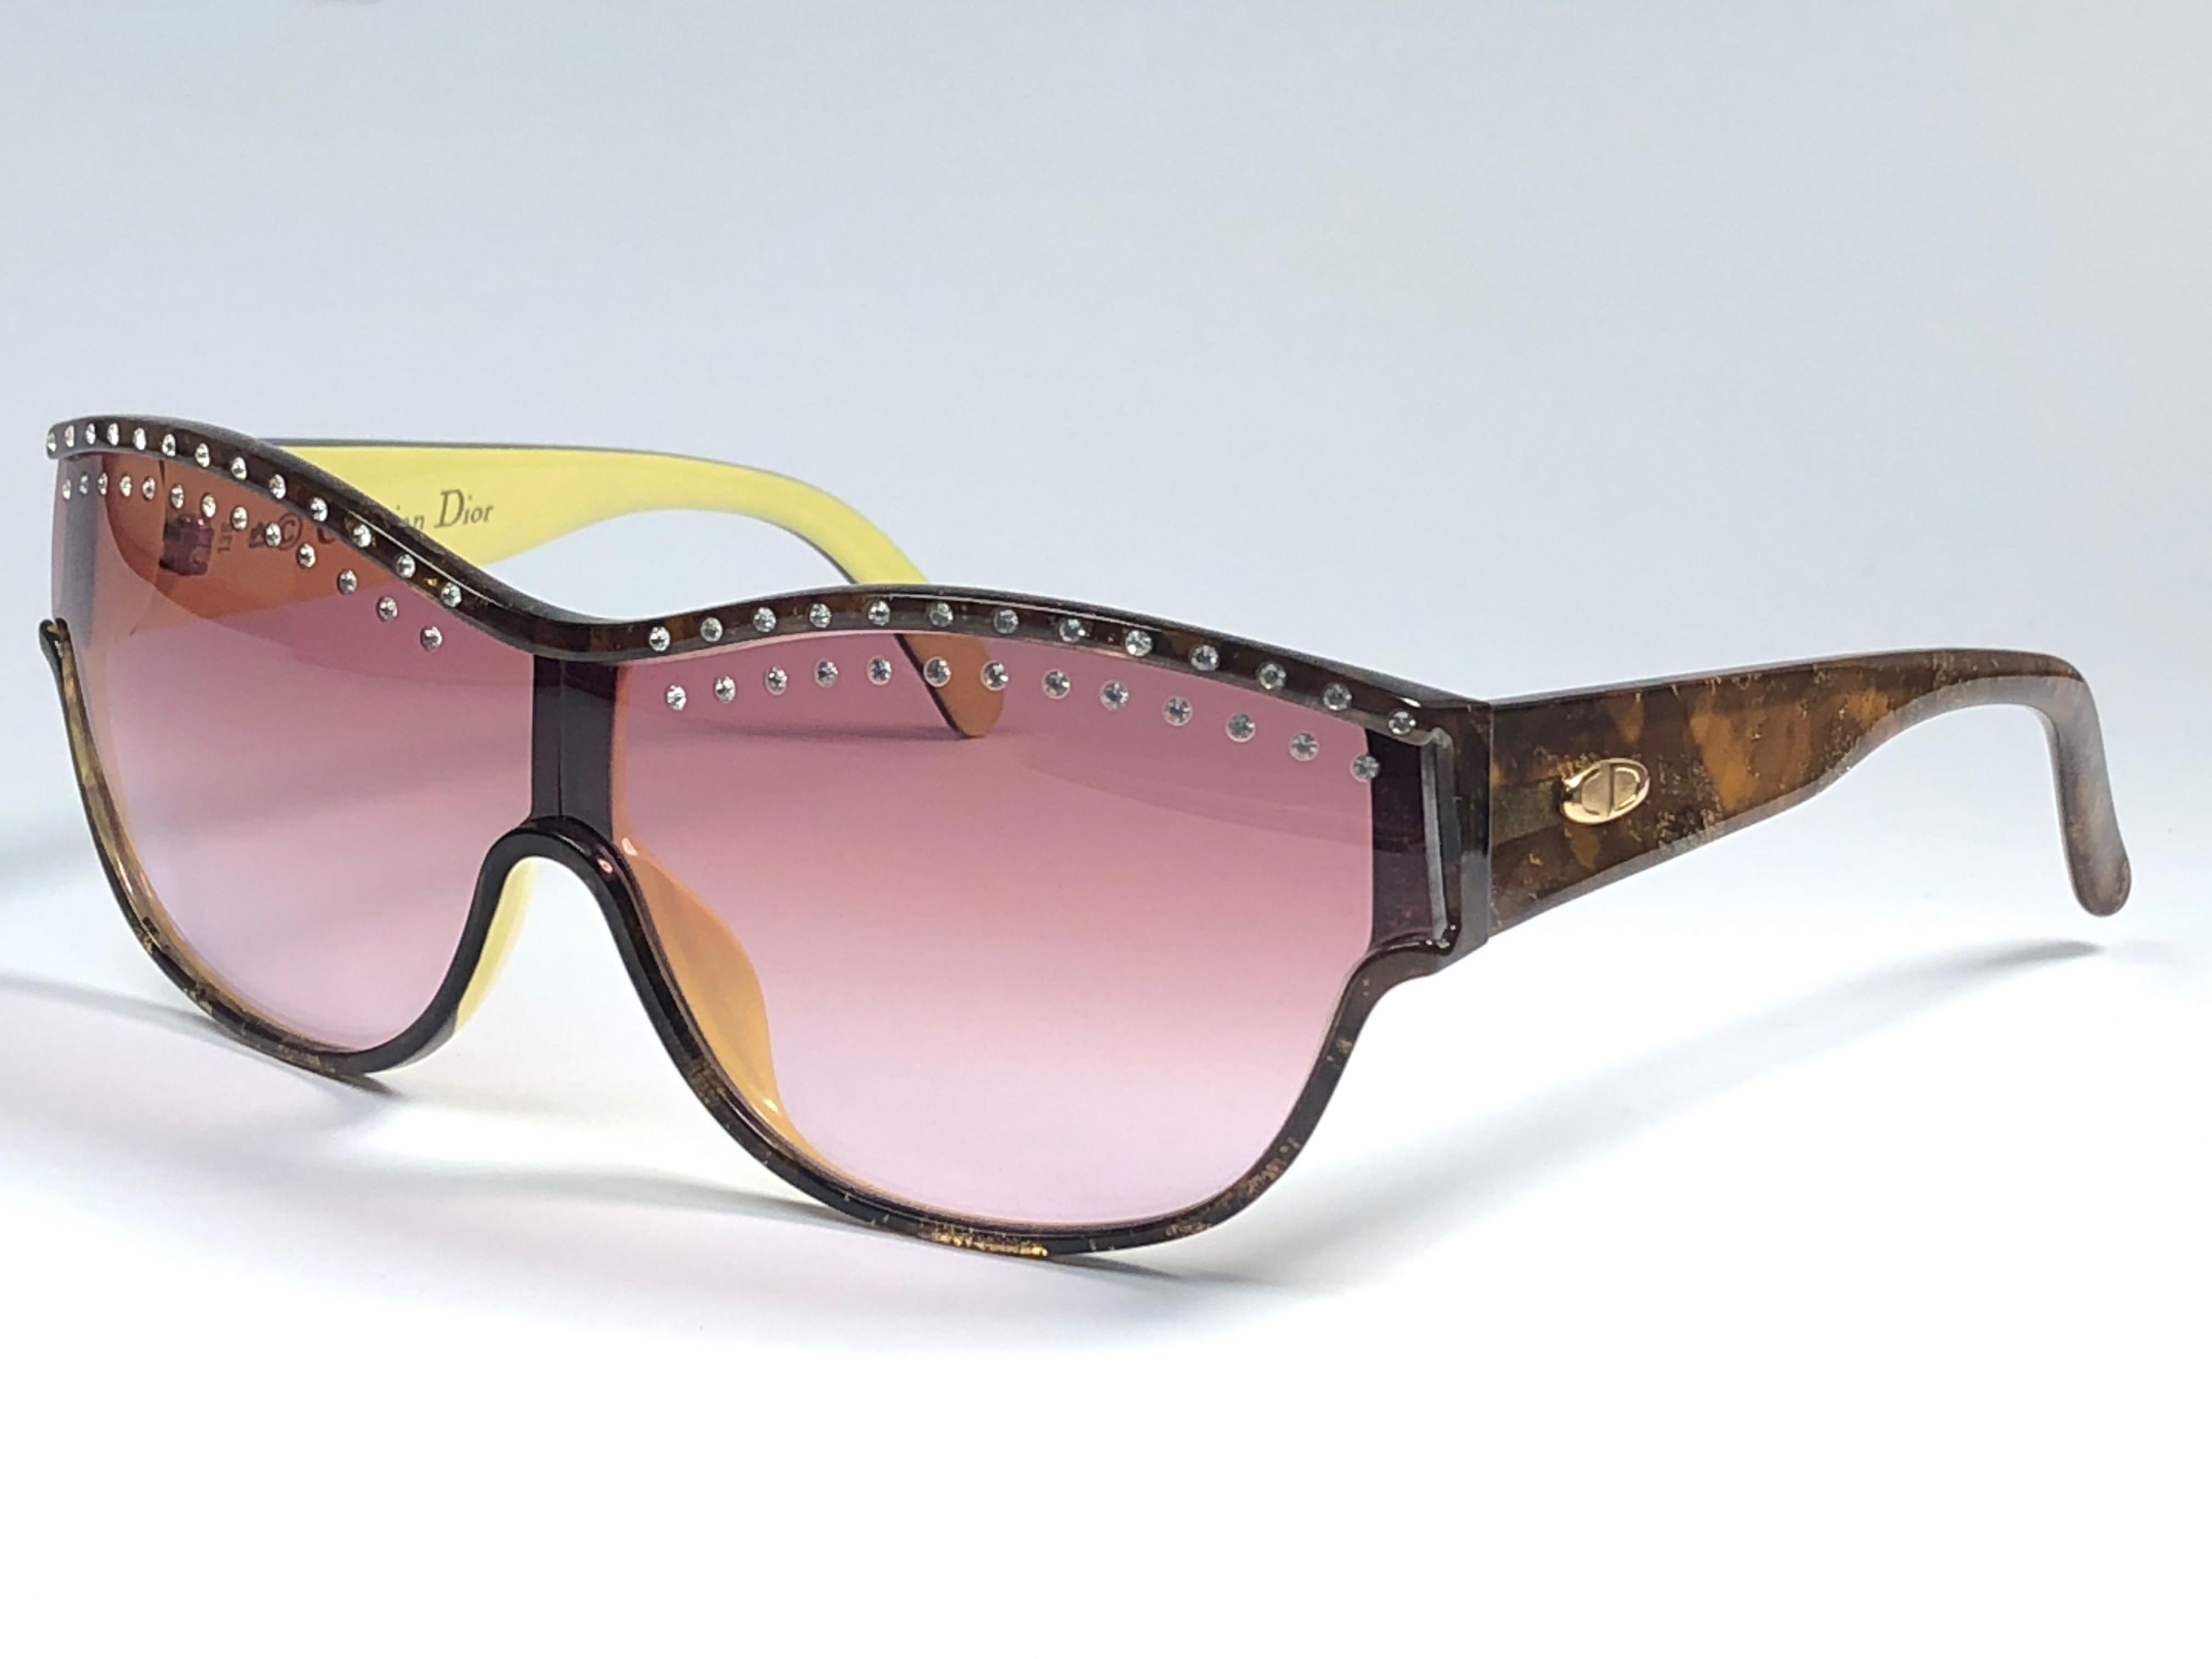 dior sunglasses with rhinestones